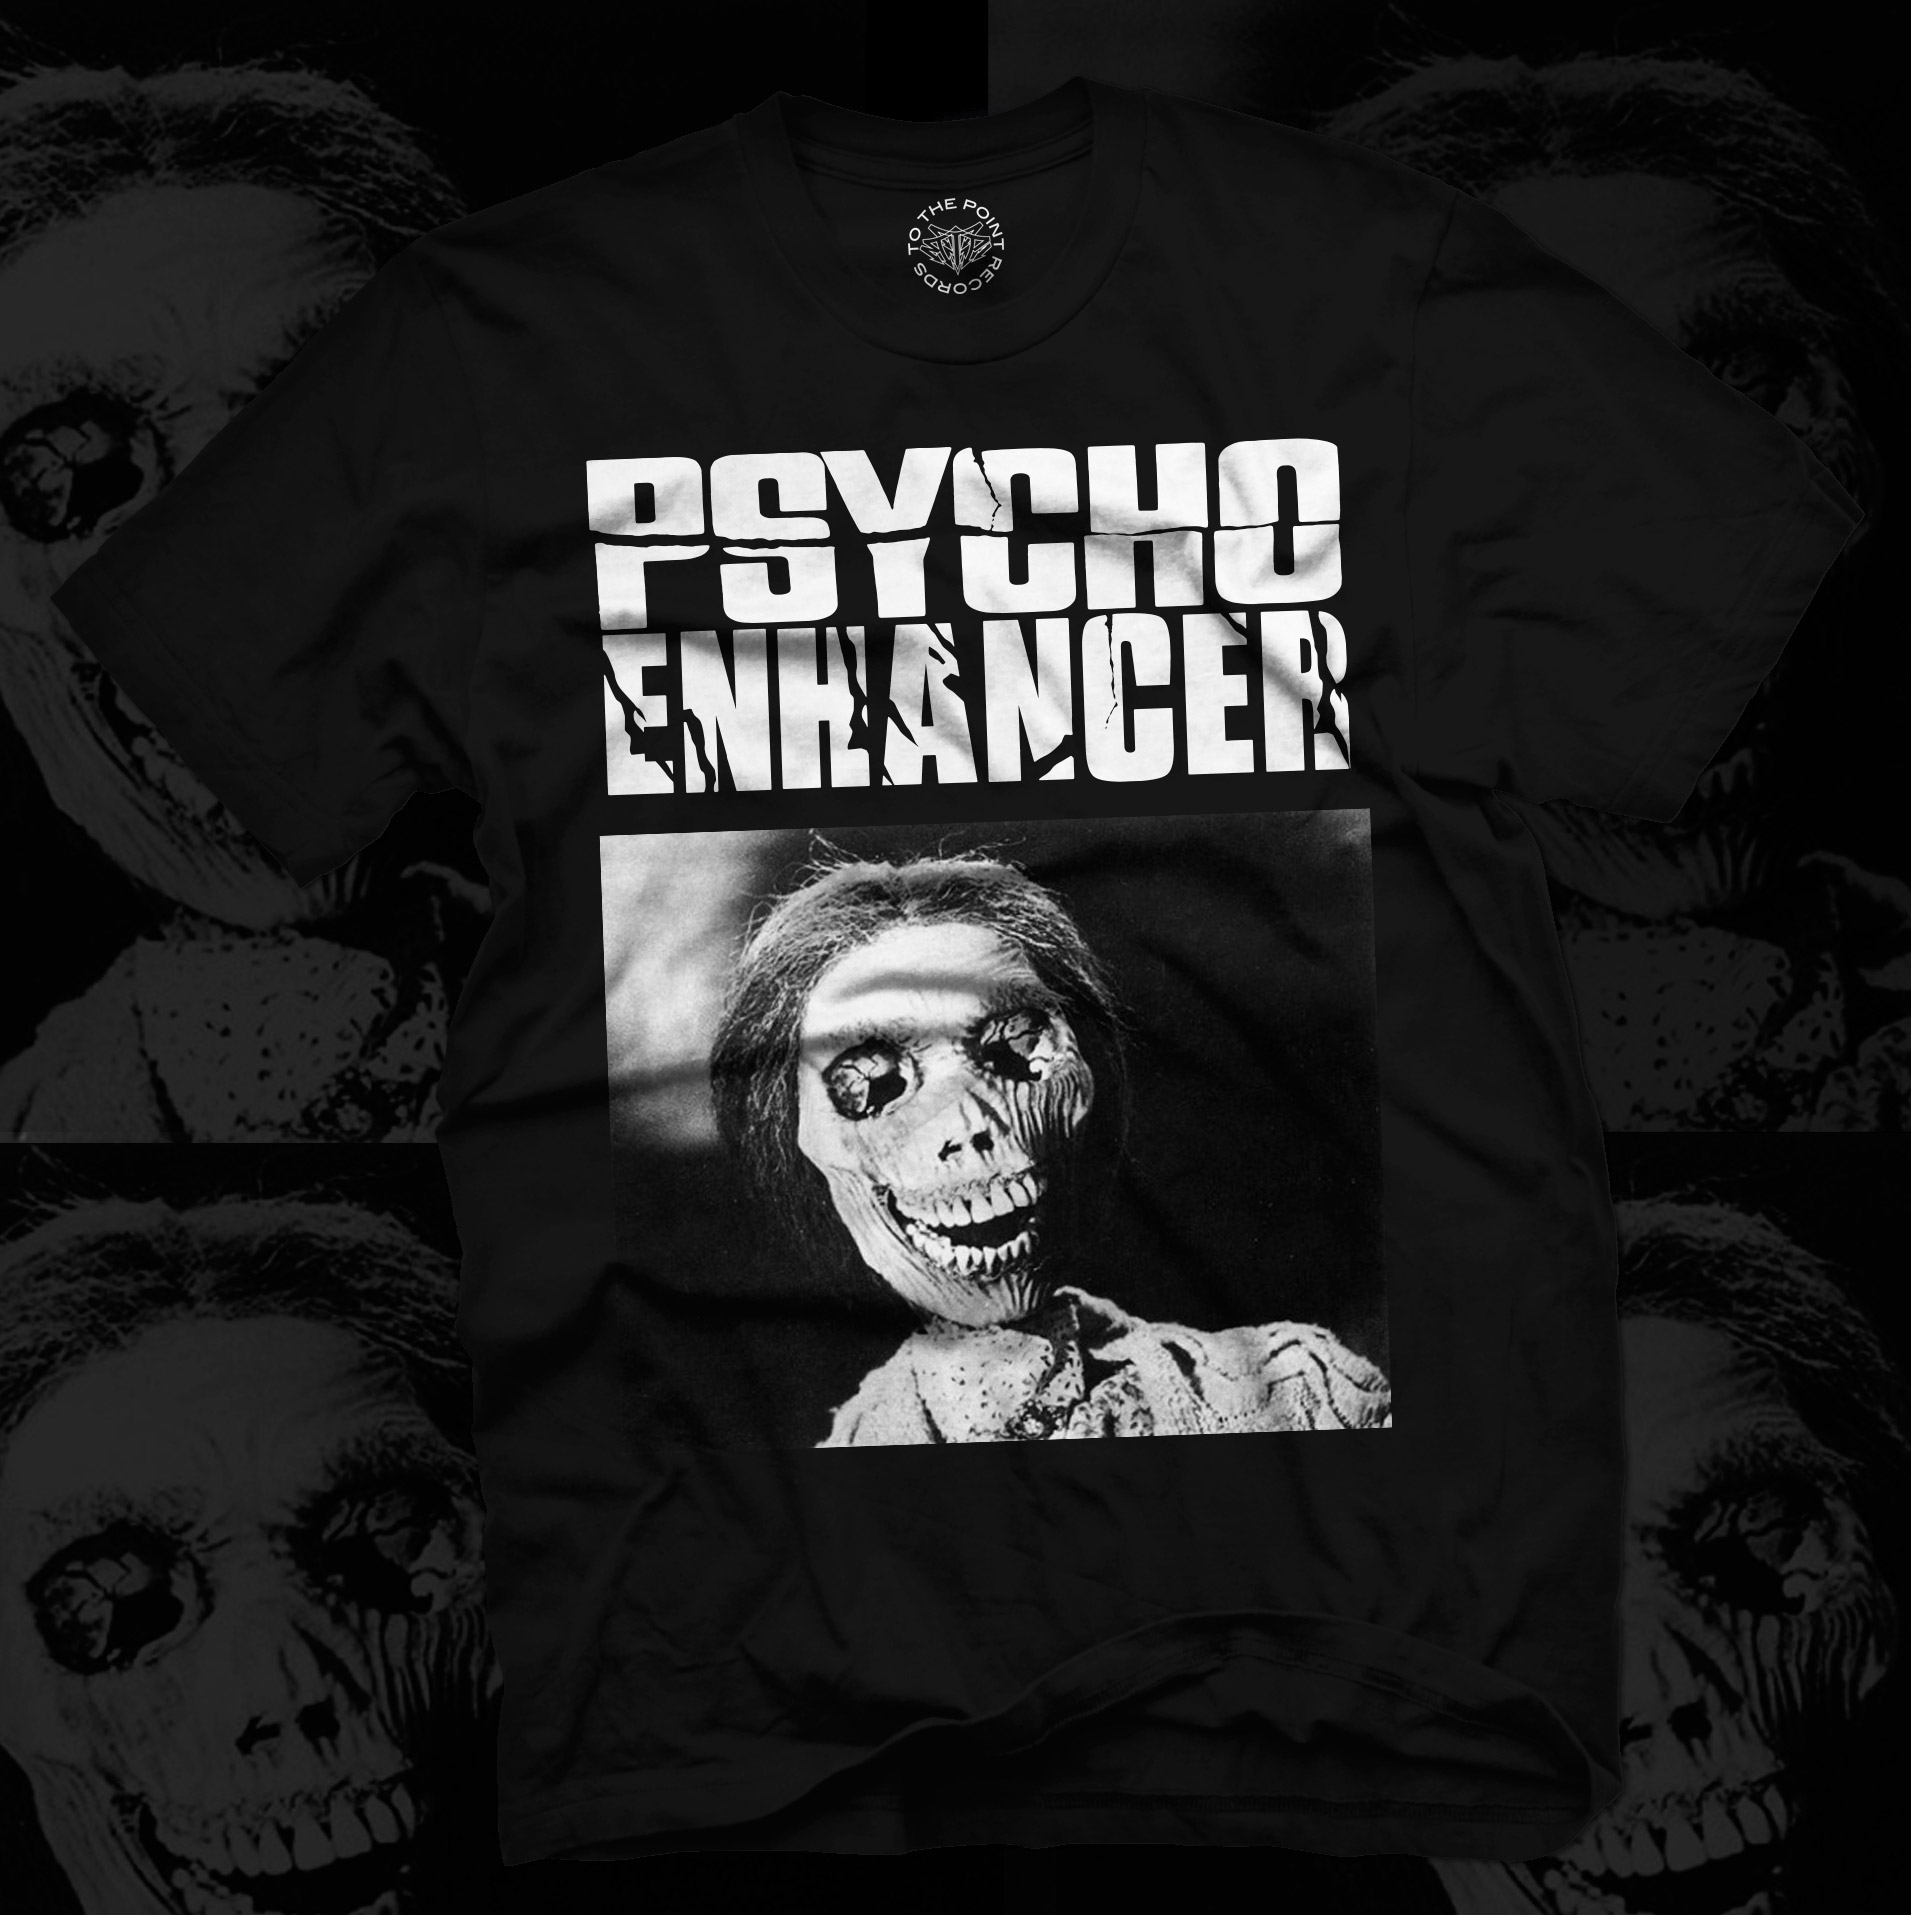 Psycho Enhancer "Normans Mom" Shirt